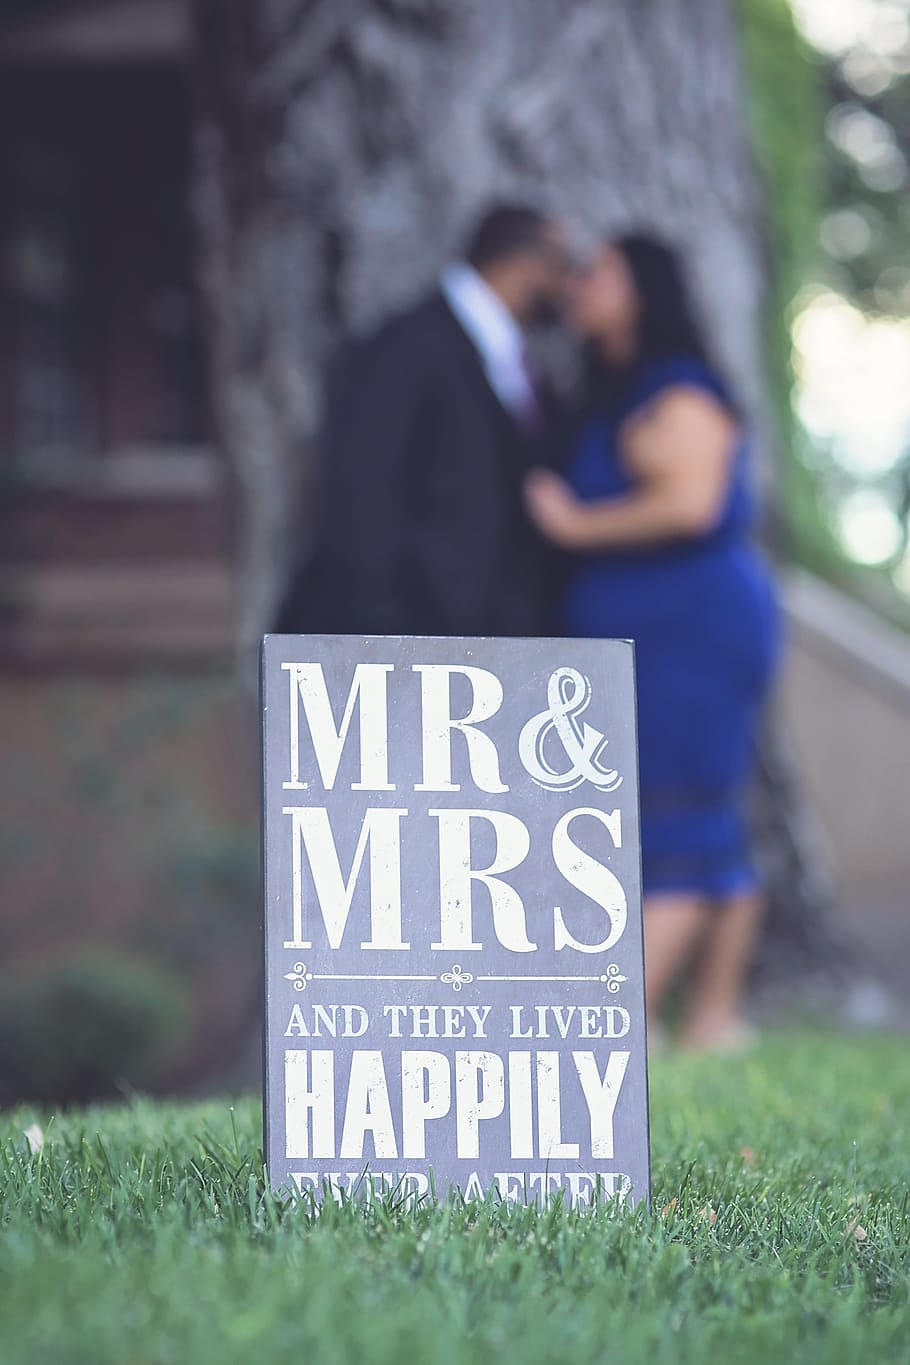 mr. & mrs., mr. & mrs poster, green, grass, Comprometido, feliz para siempre, Celebración, compromiso, amor, romance